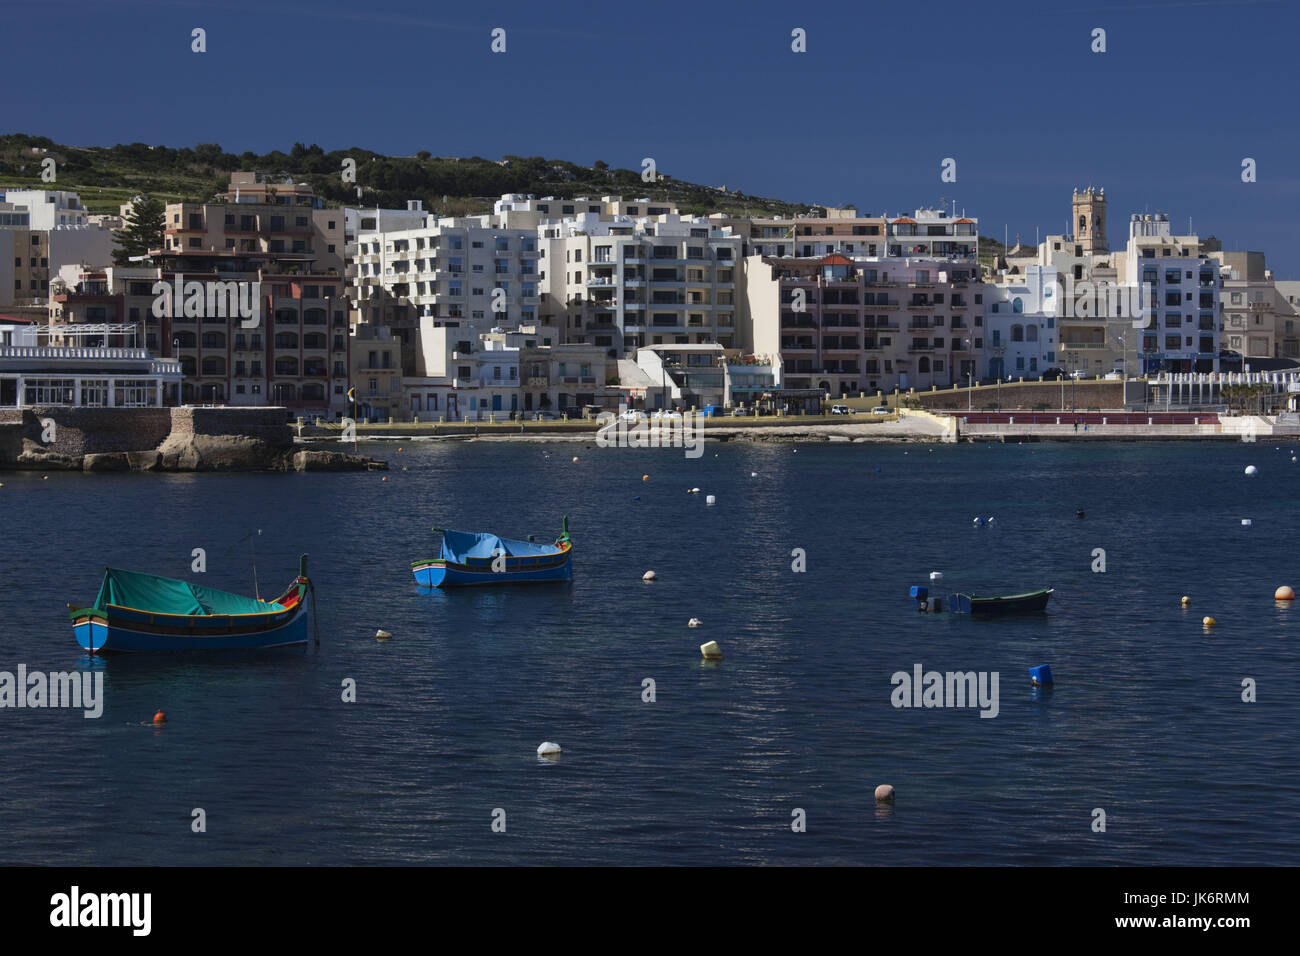 Malta, St. Paul's Bay area, Bugibba, town waterfront with view towards Xemxija Stock Photo